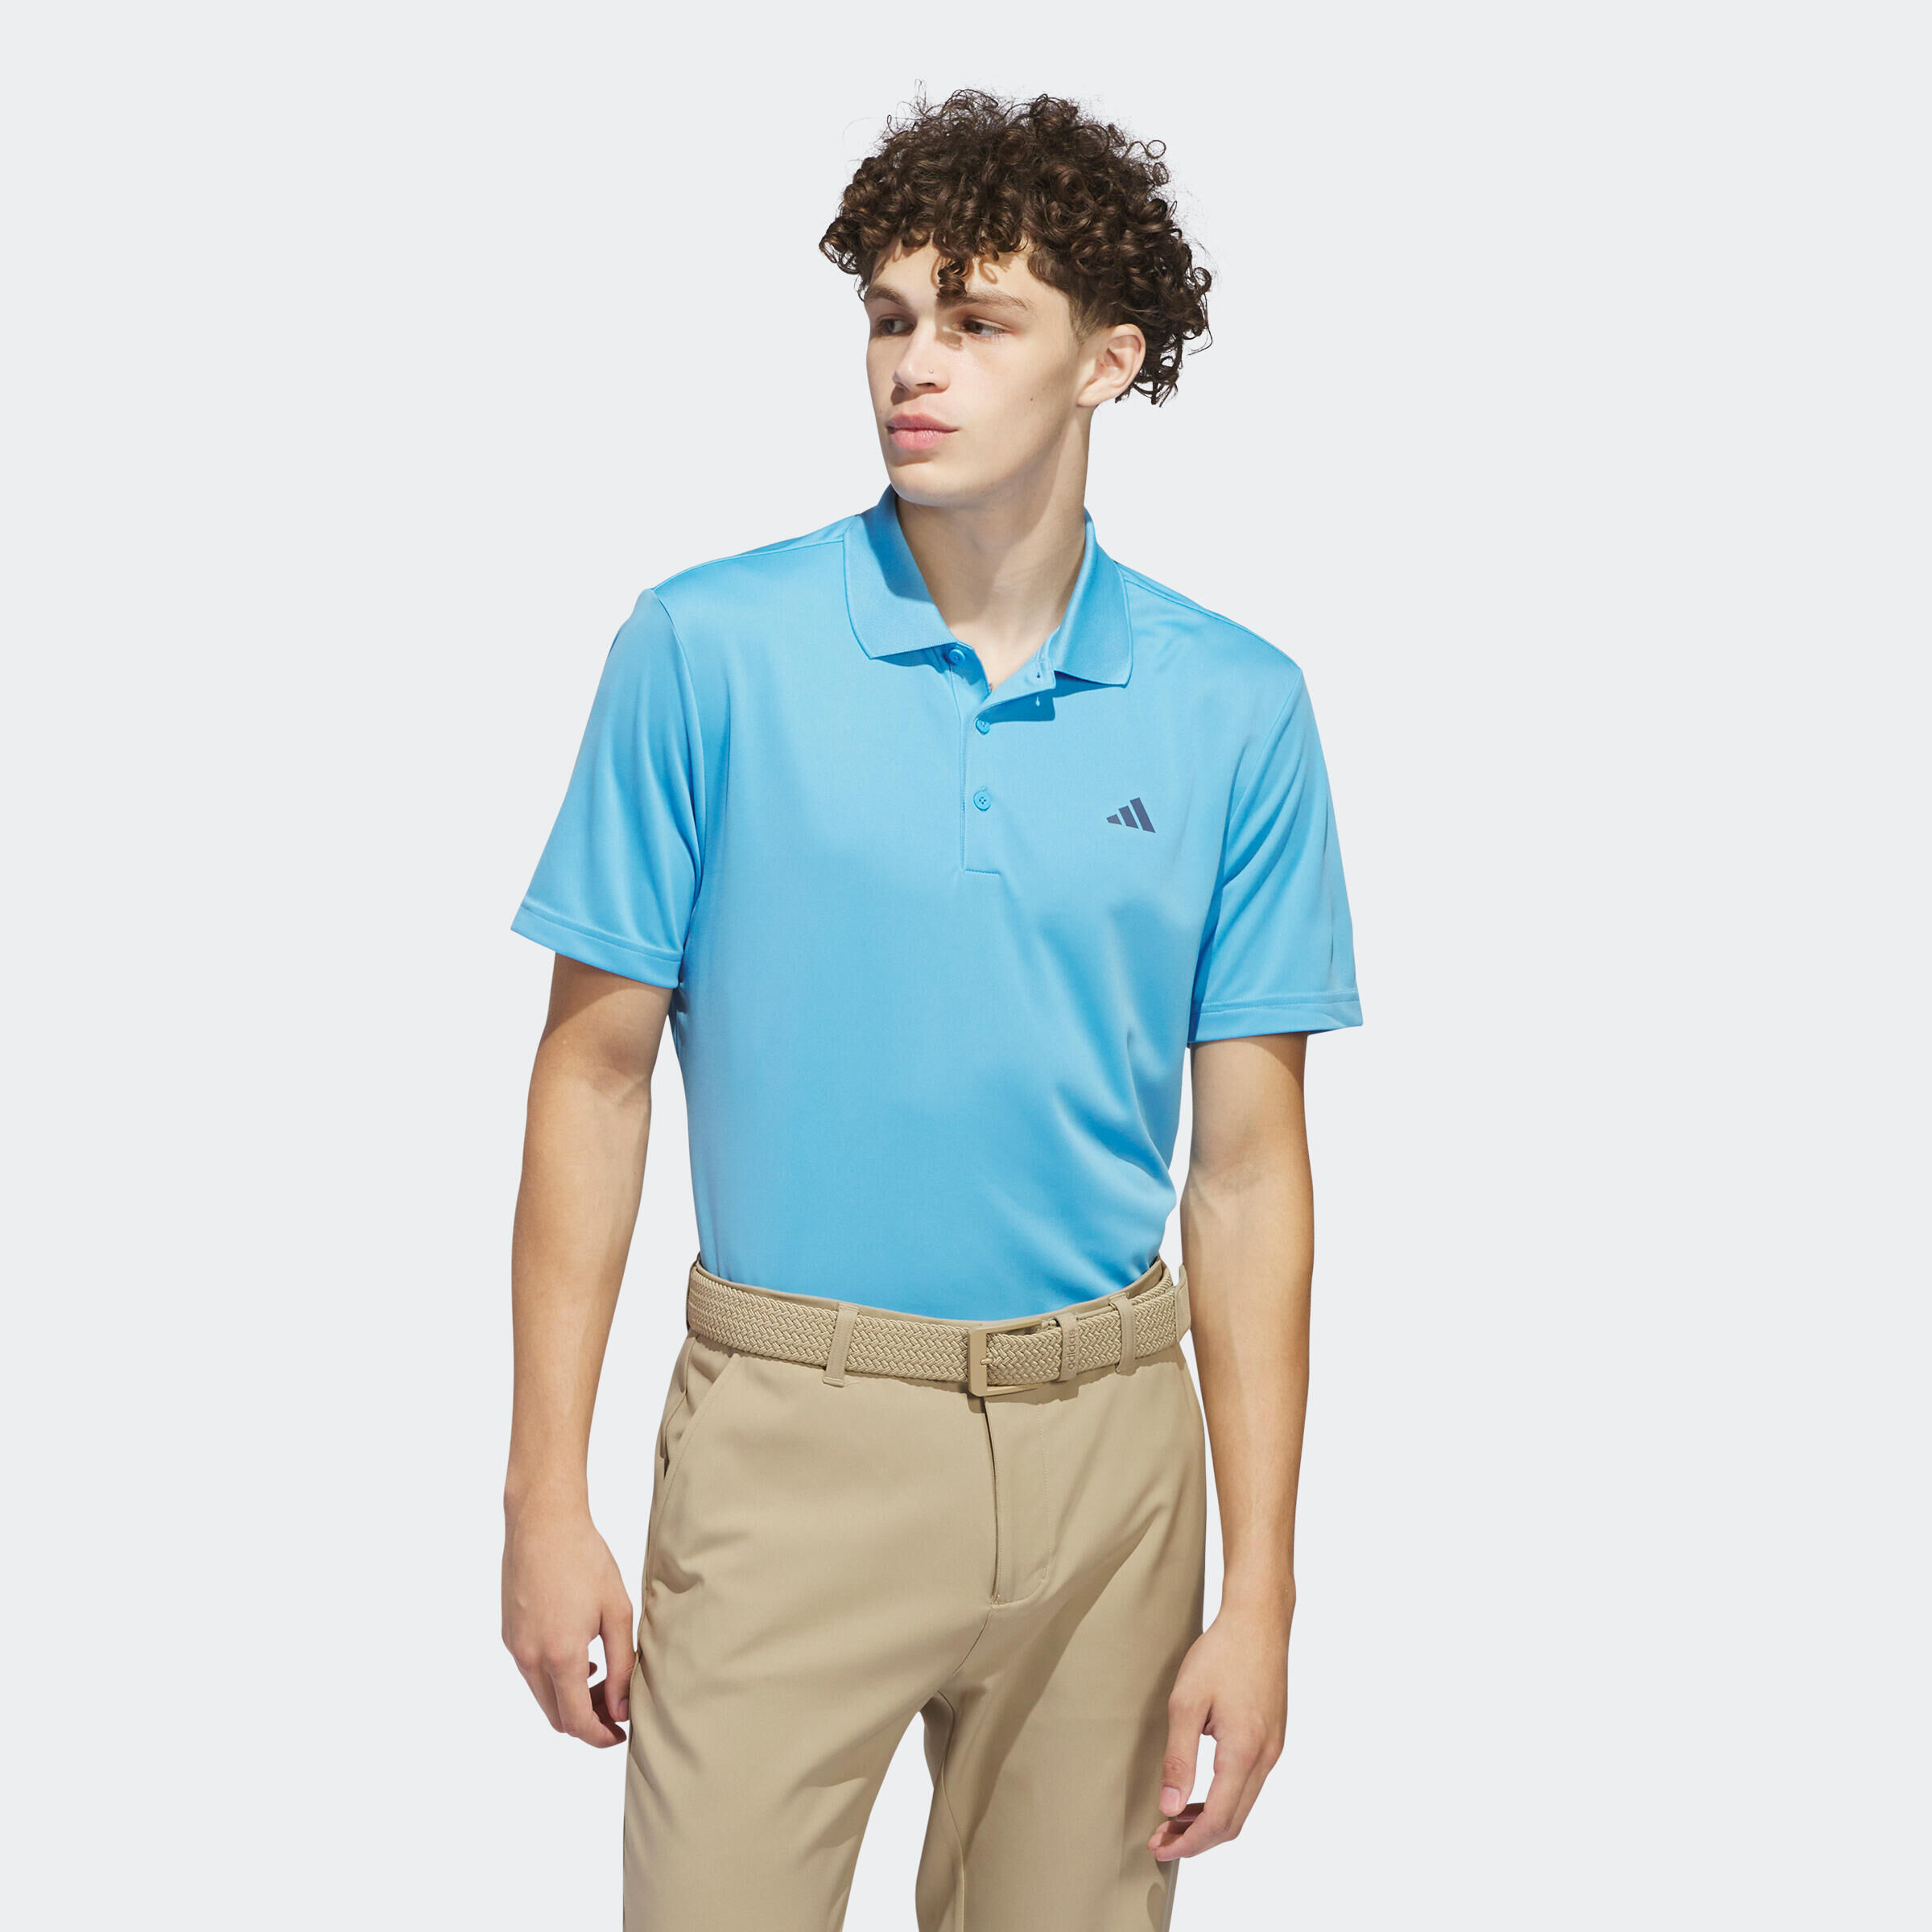 ADIDAS Men's golf short sleeve polo shirt - Adidas sky blue